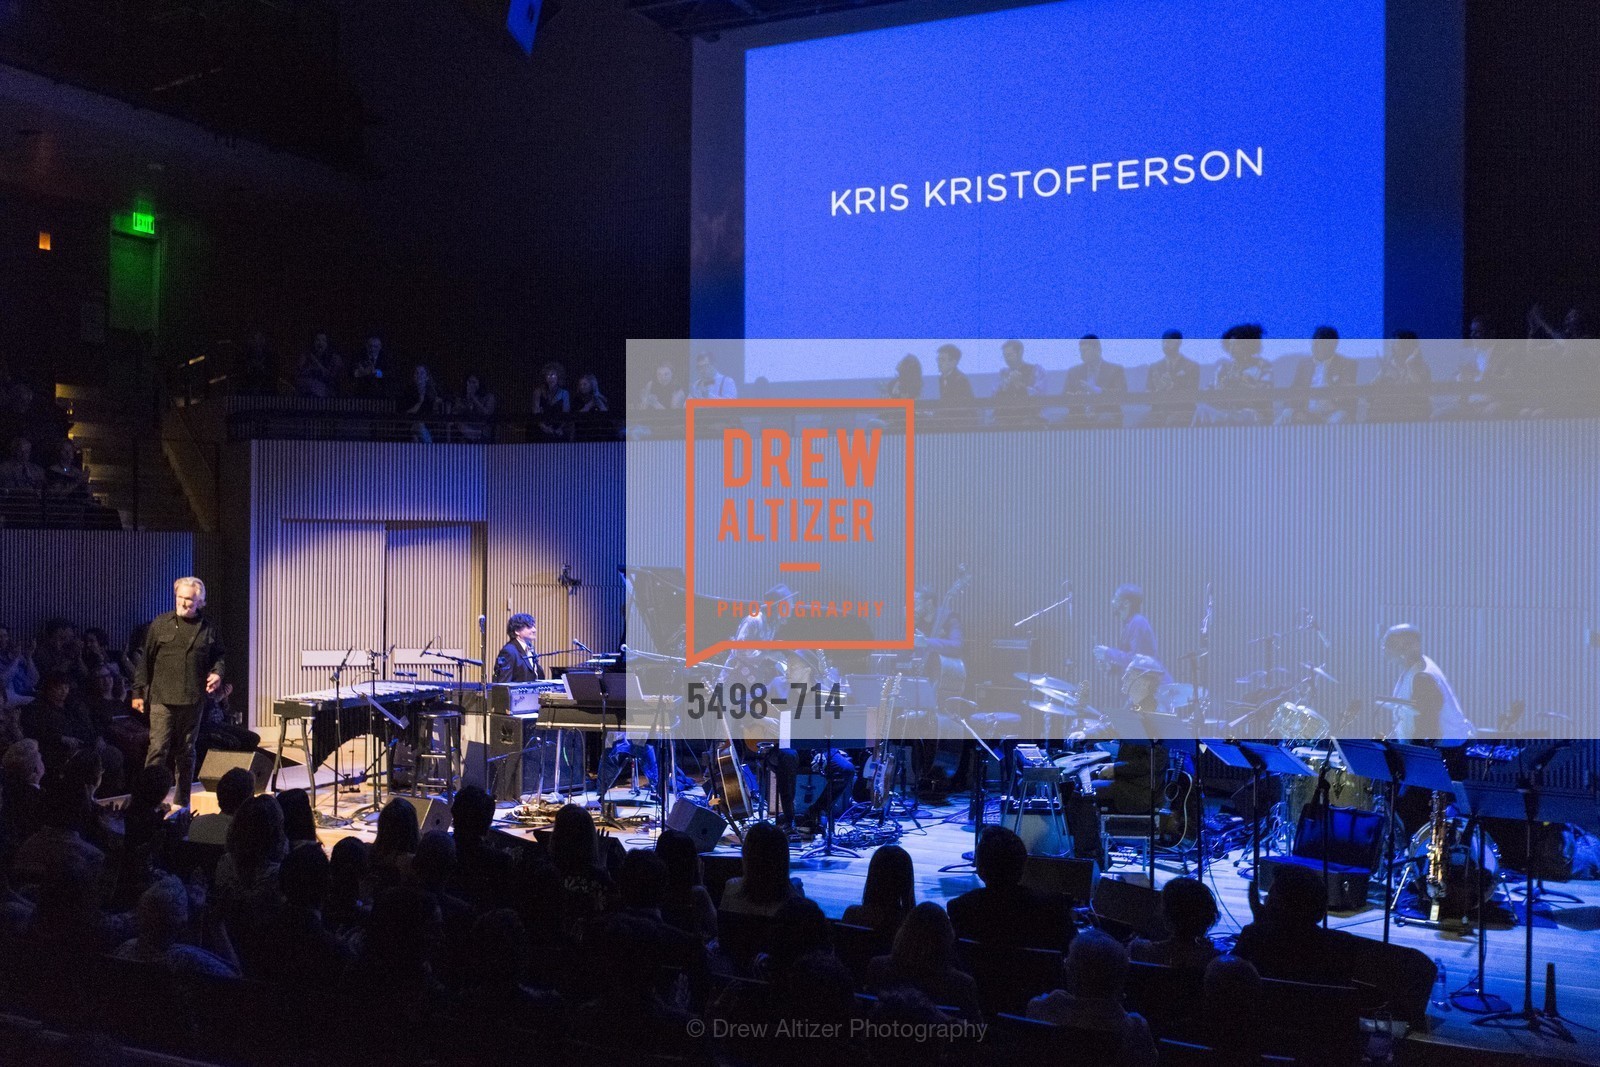 Performance By Kris Kristofferson, Photo #5498-714